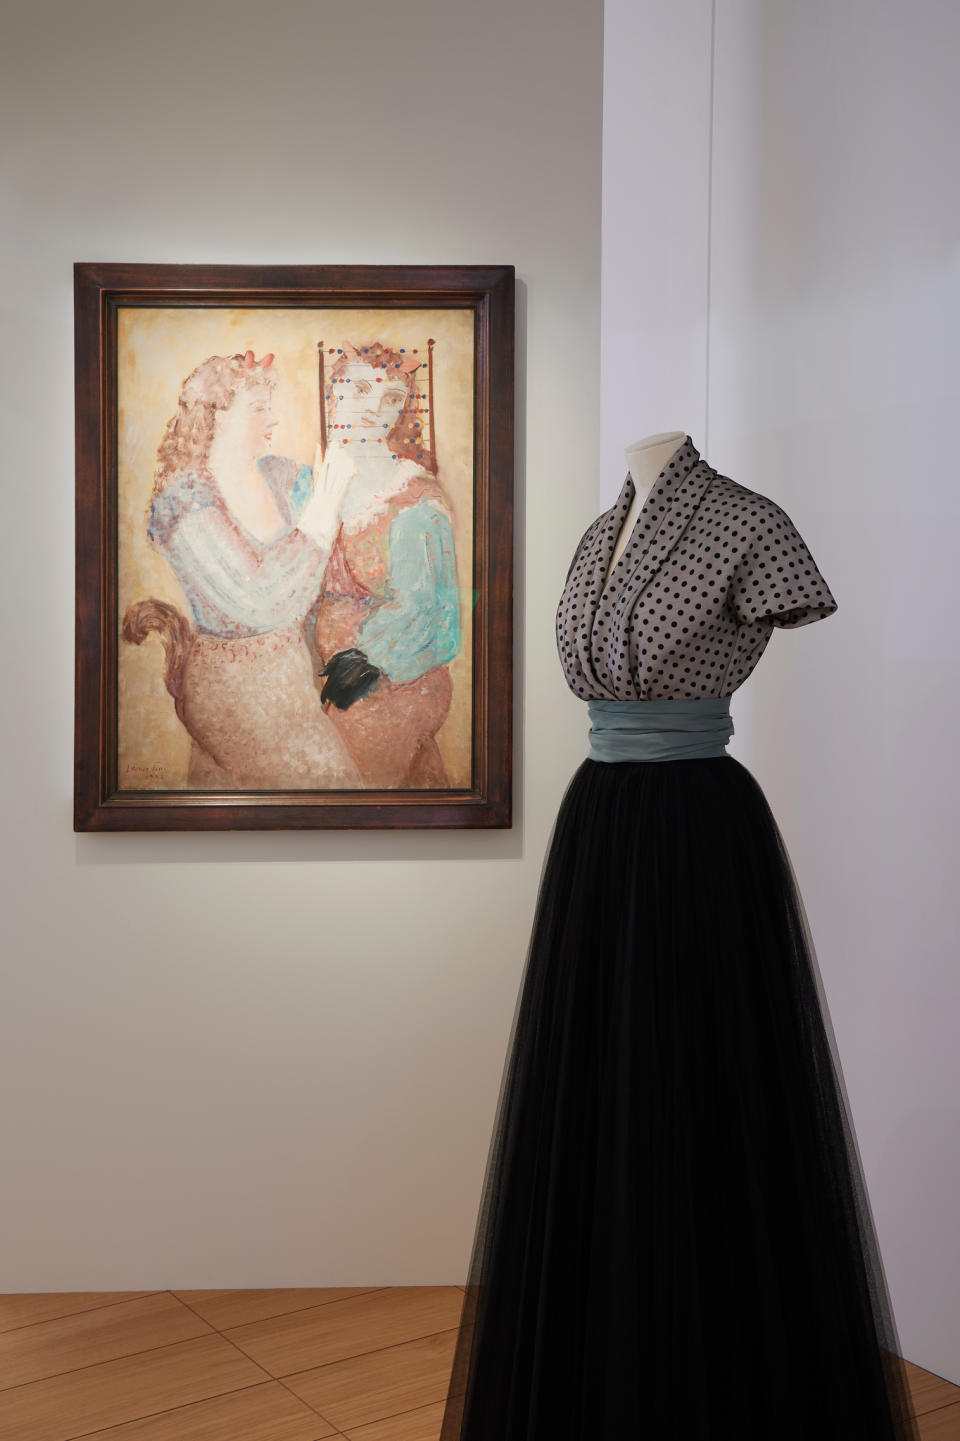 Christian Dior's Colette dress alongside a Leonor Fini painting.